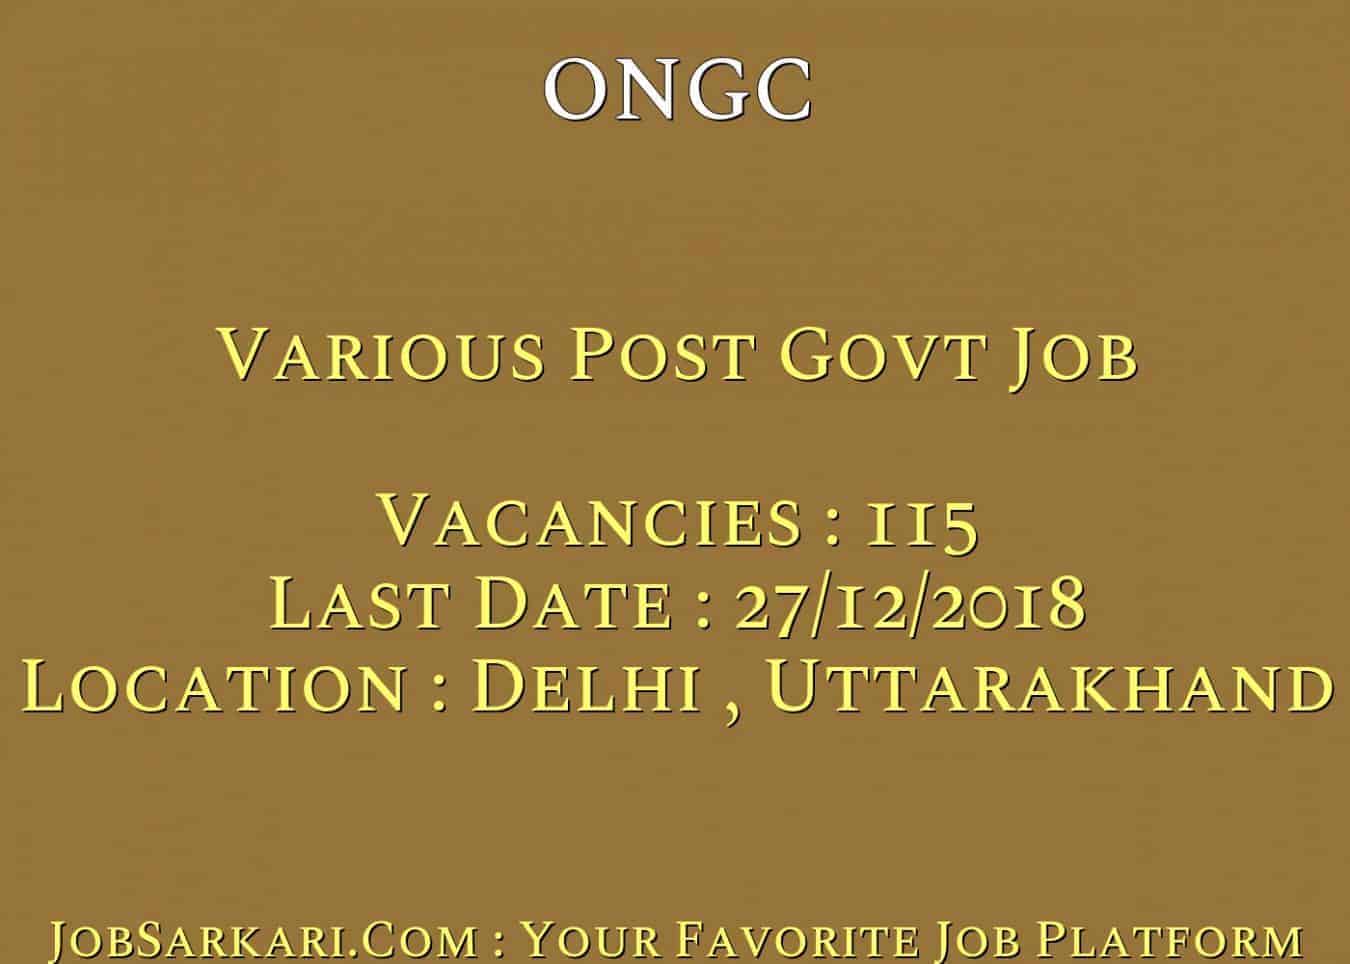 ONGC Recruitment 2018 For Various Post Govt Job